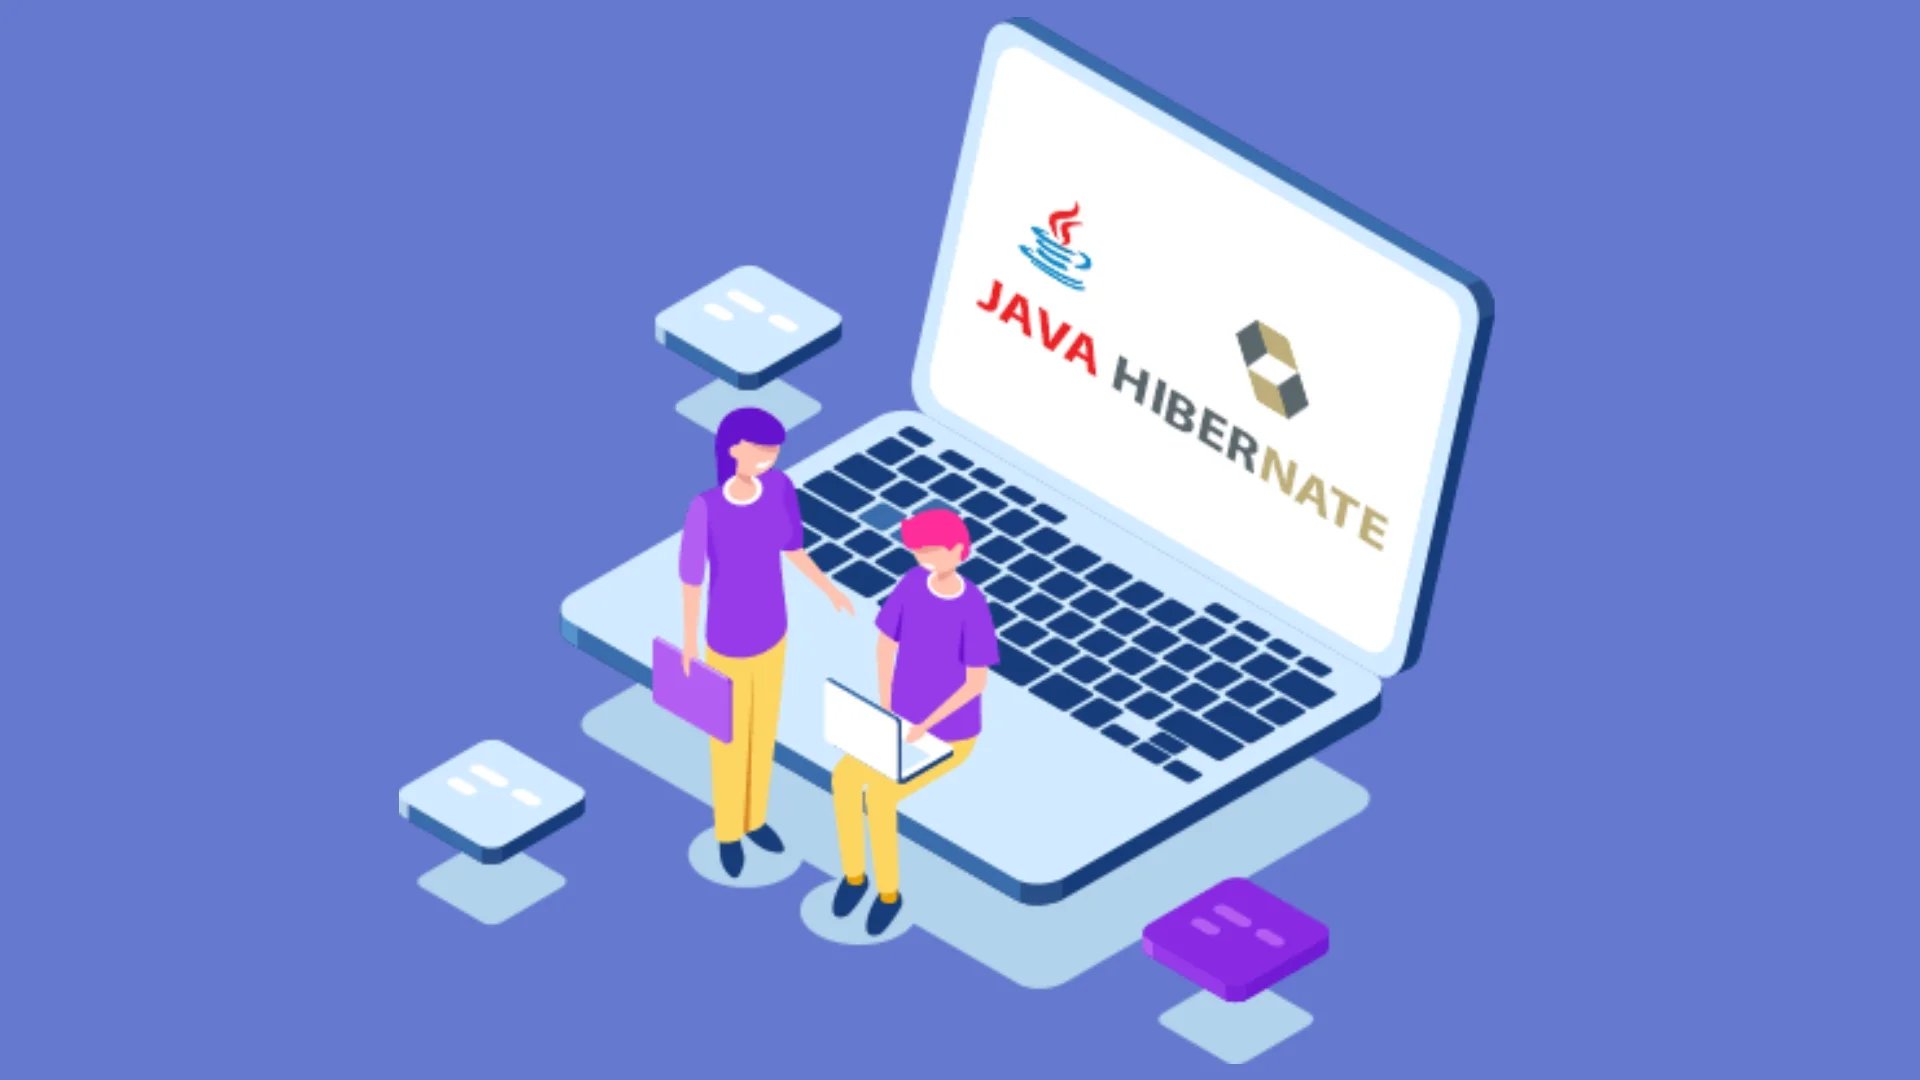 Read more about the article Java mein Hibernate ke saath Interactive Web Applications Banane ka Step-by-Step Guide: